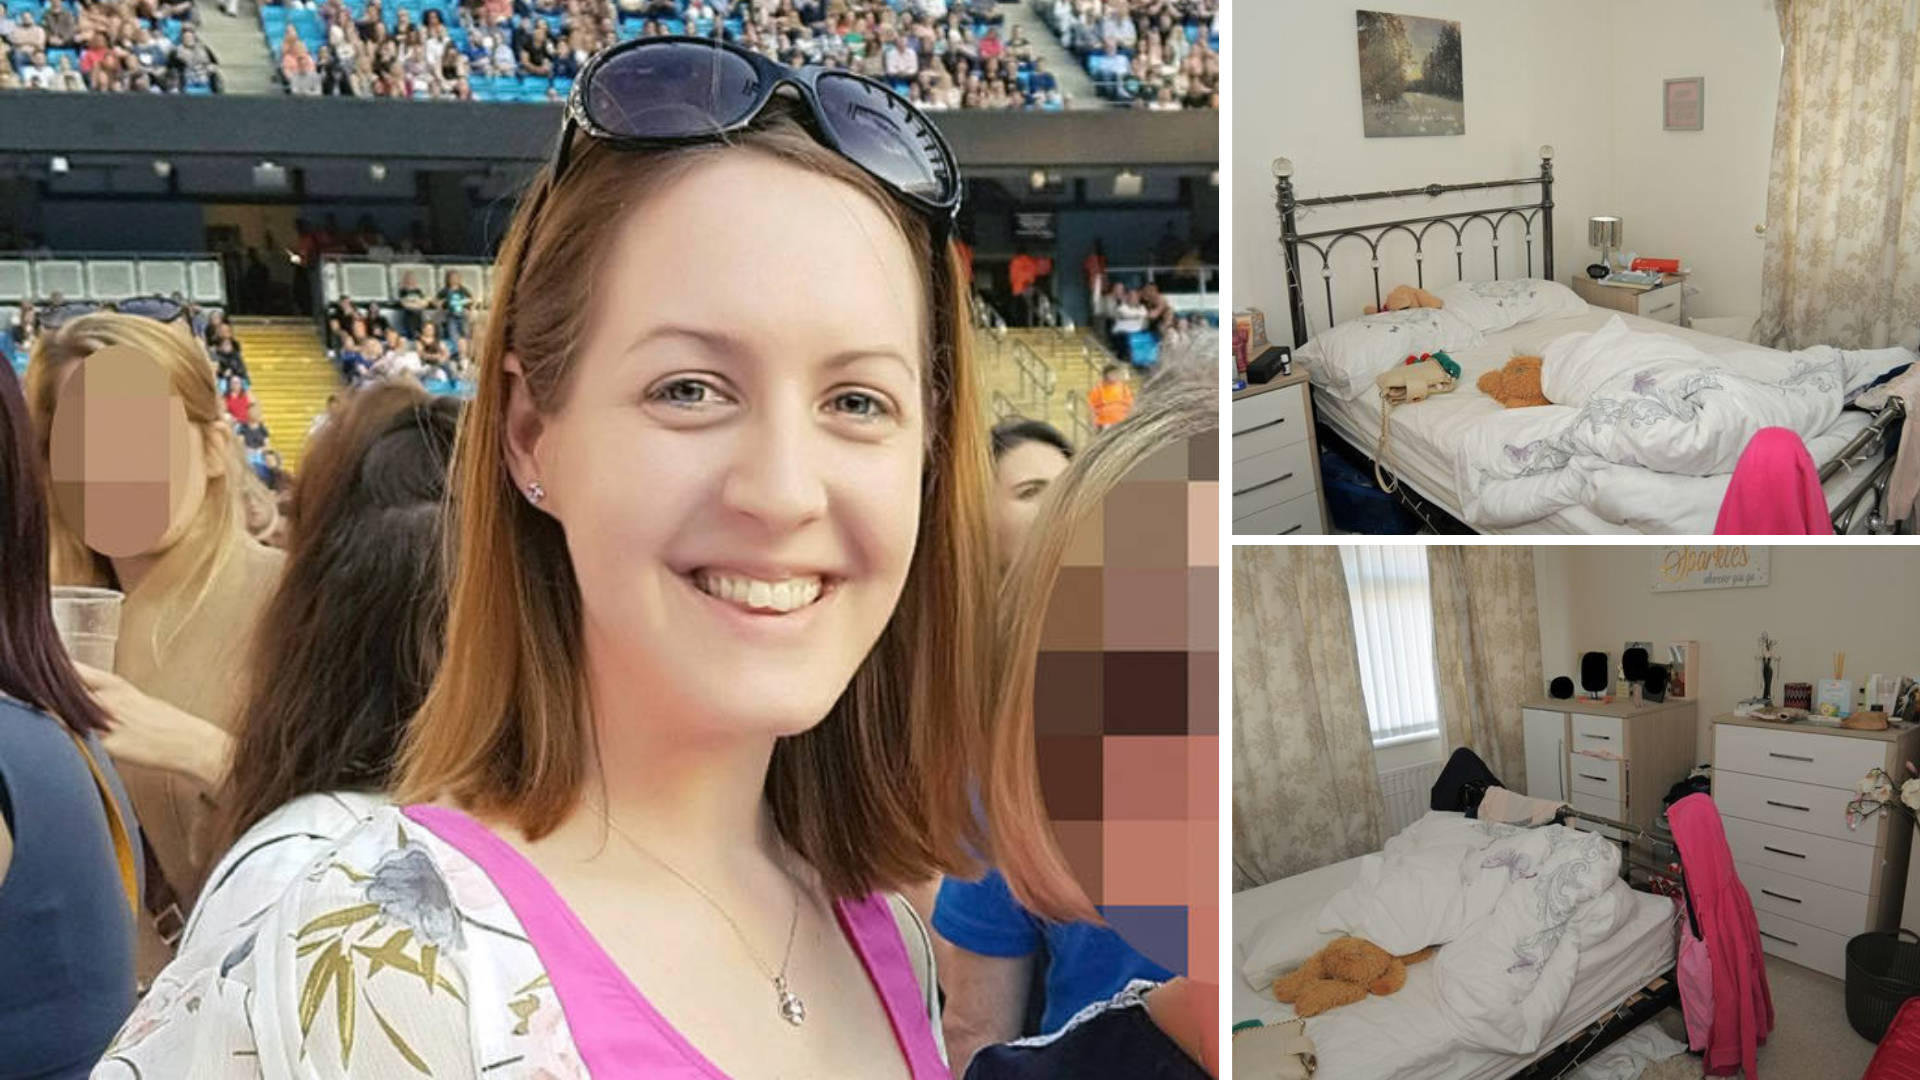 UK: Nurse found guilty of murdering seven babies